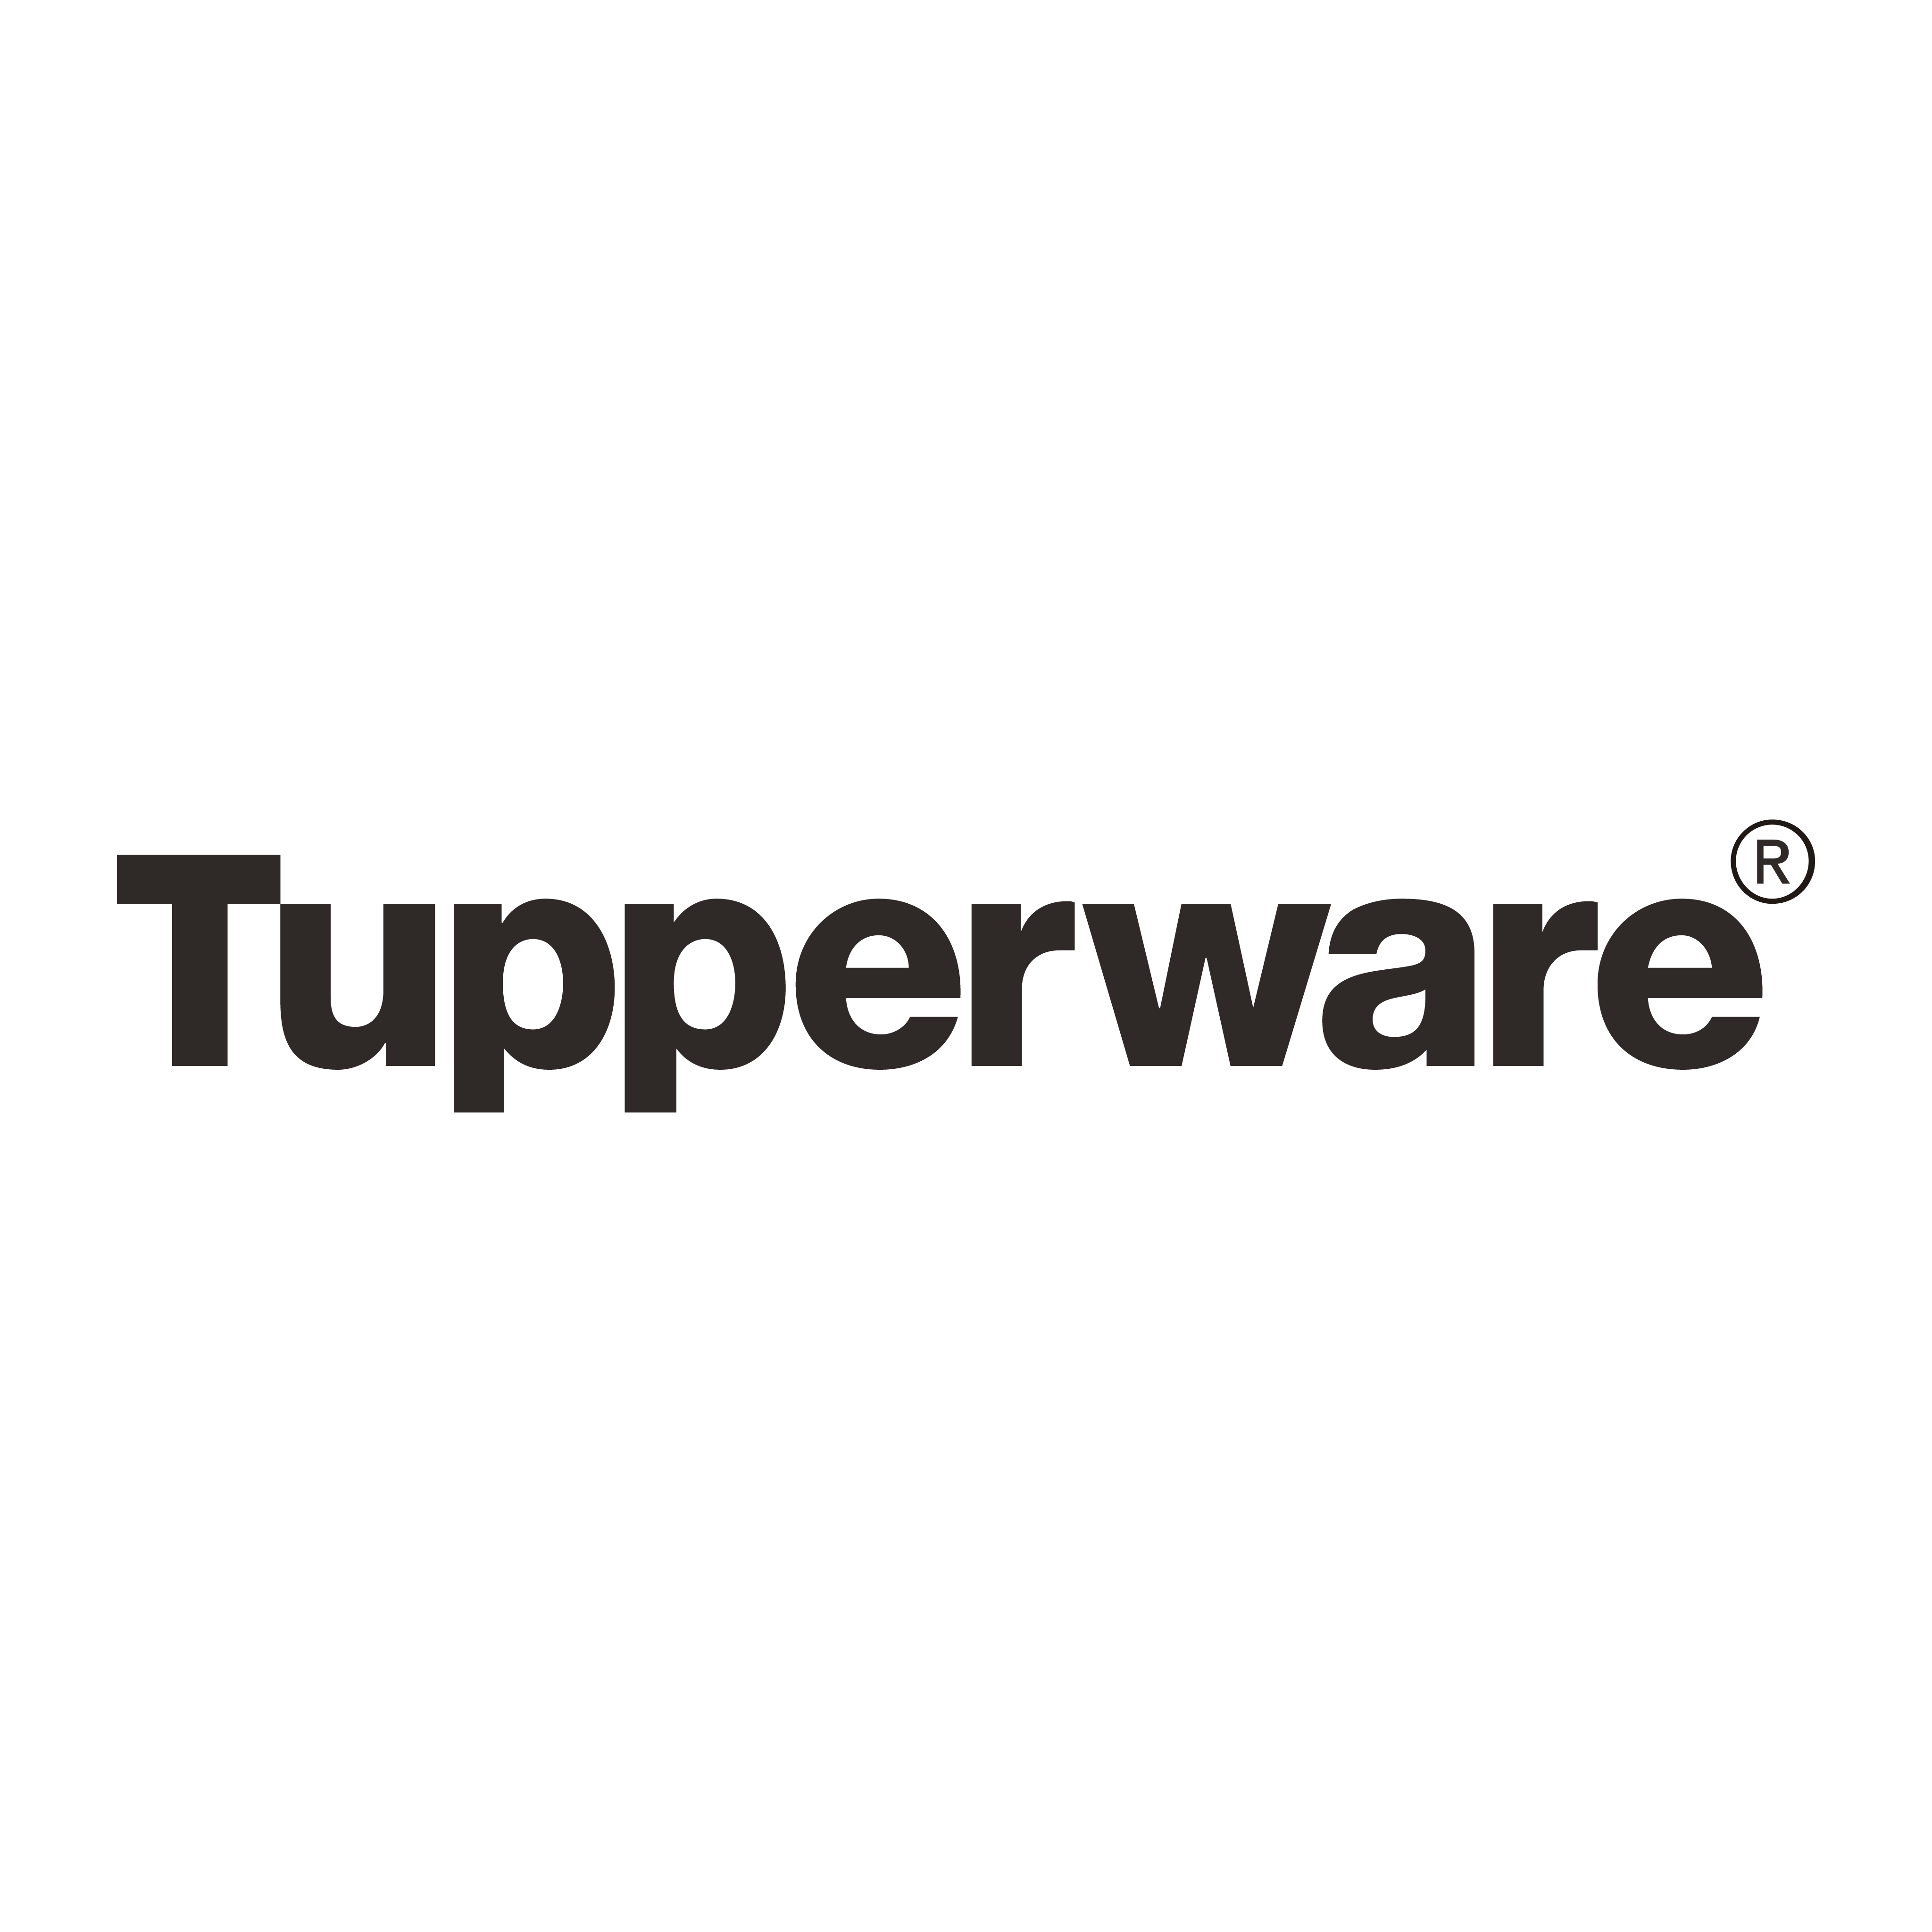 logo tupperware